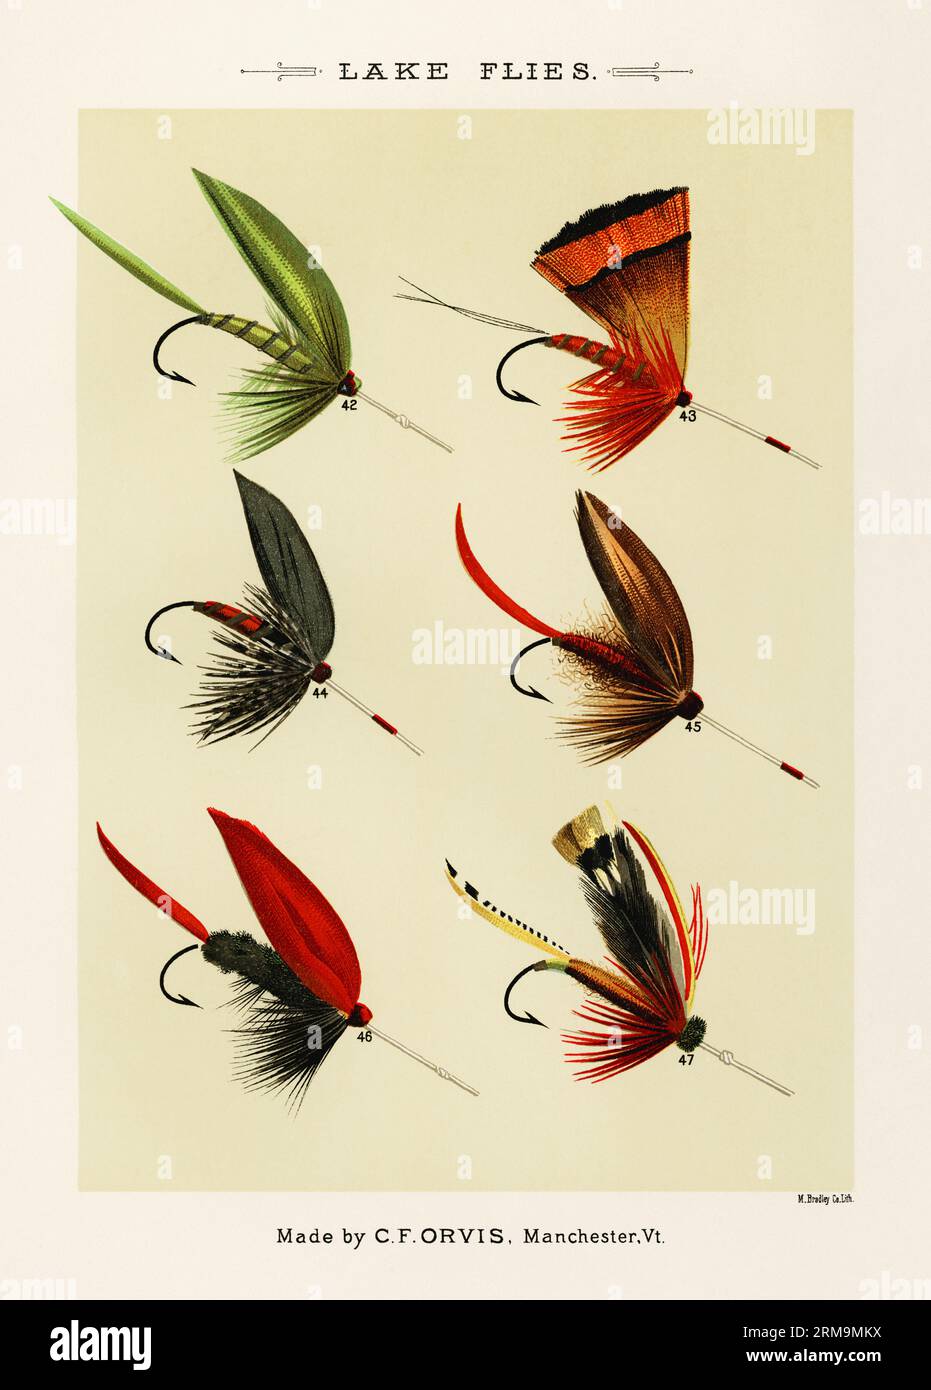 Vintage Illustration of fly fishing hooks: Assorted barbed fly